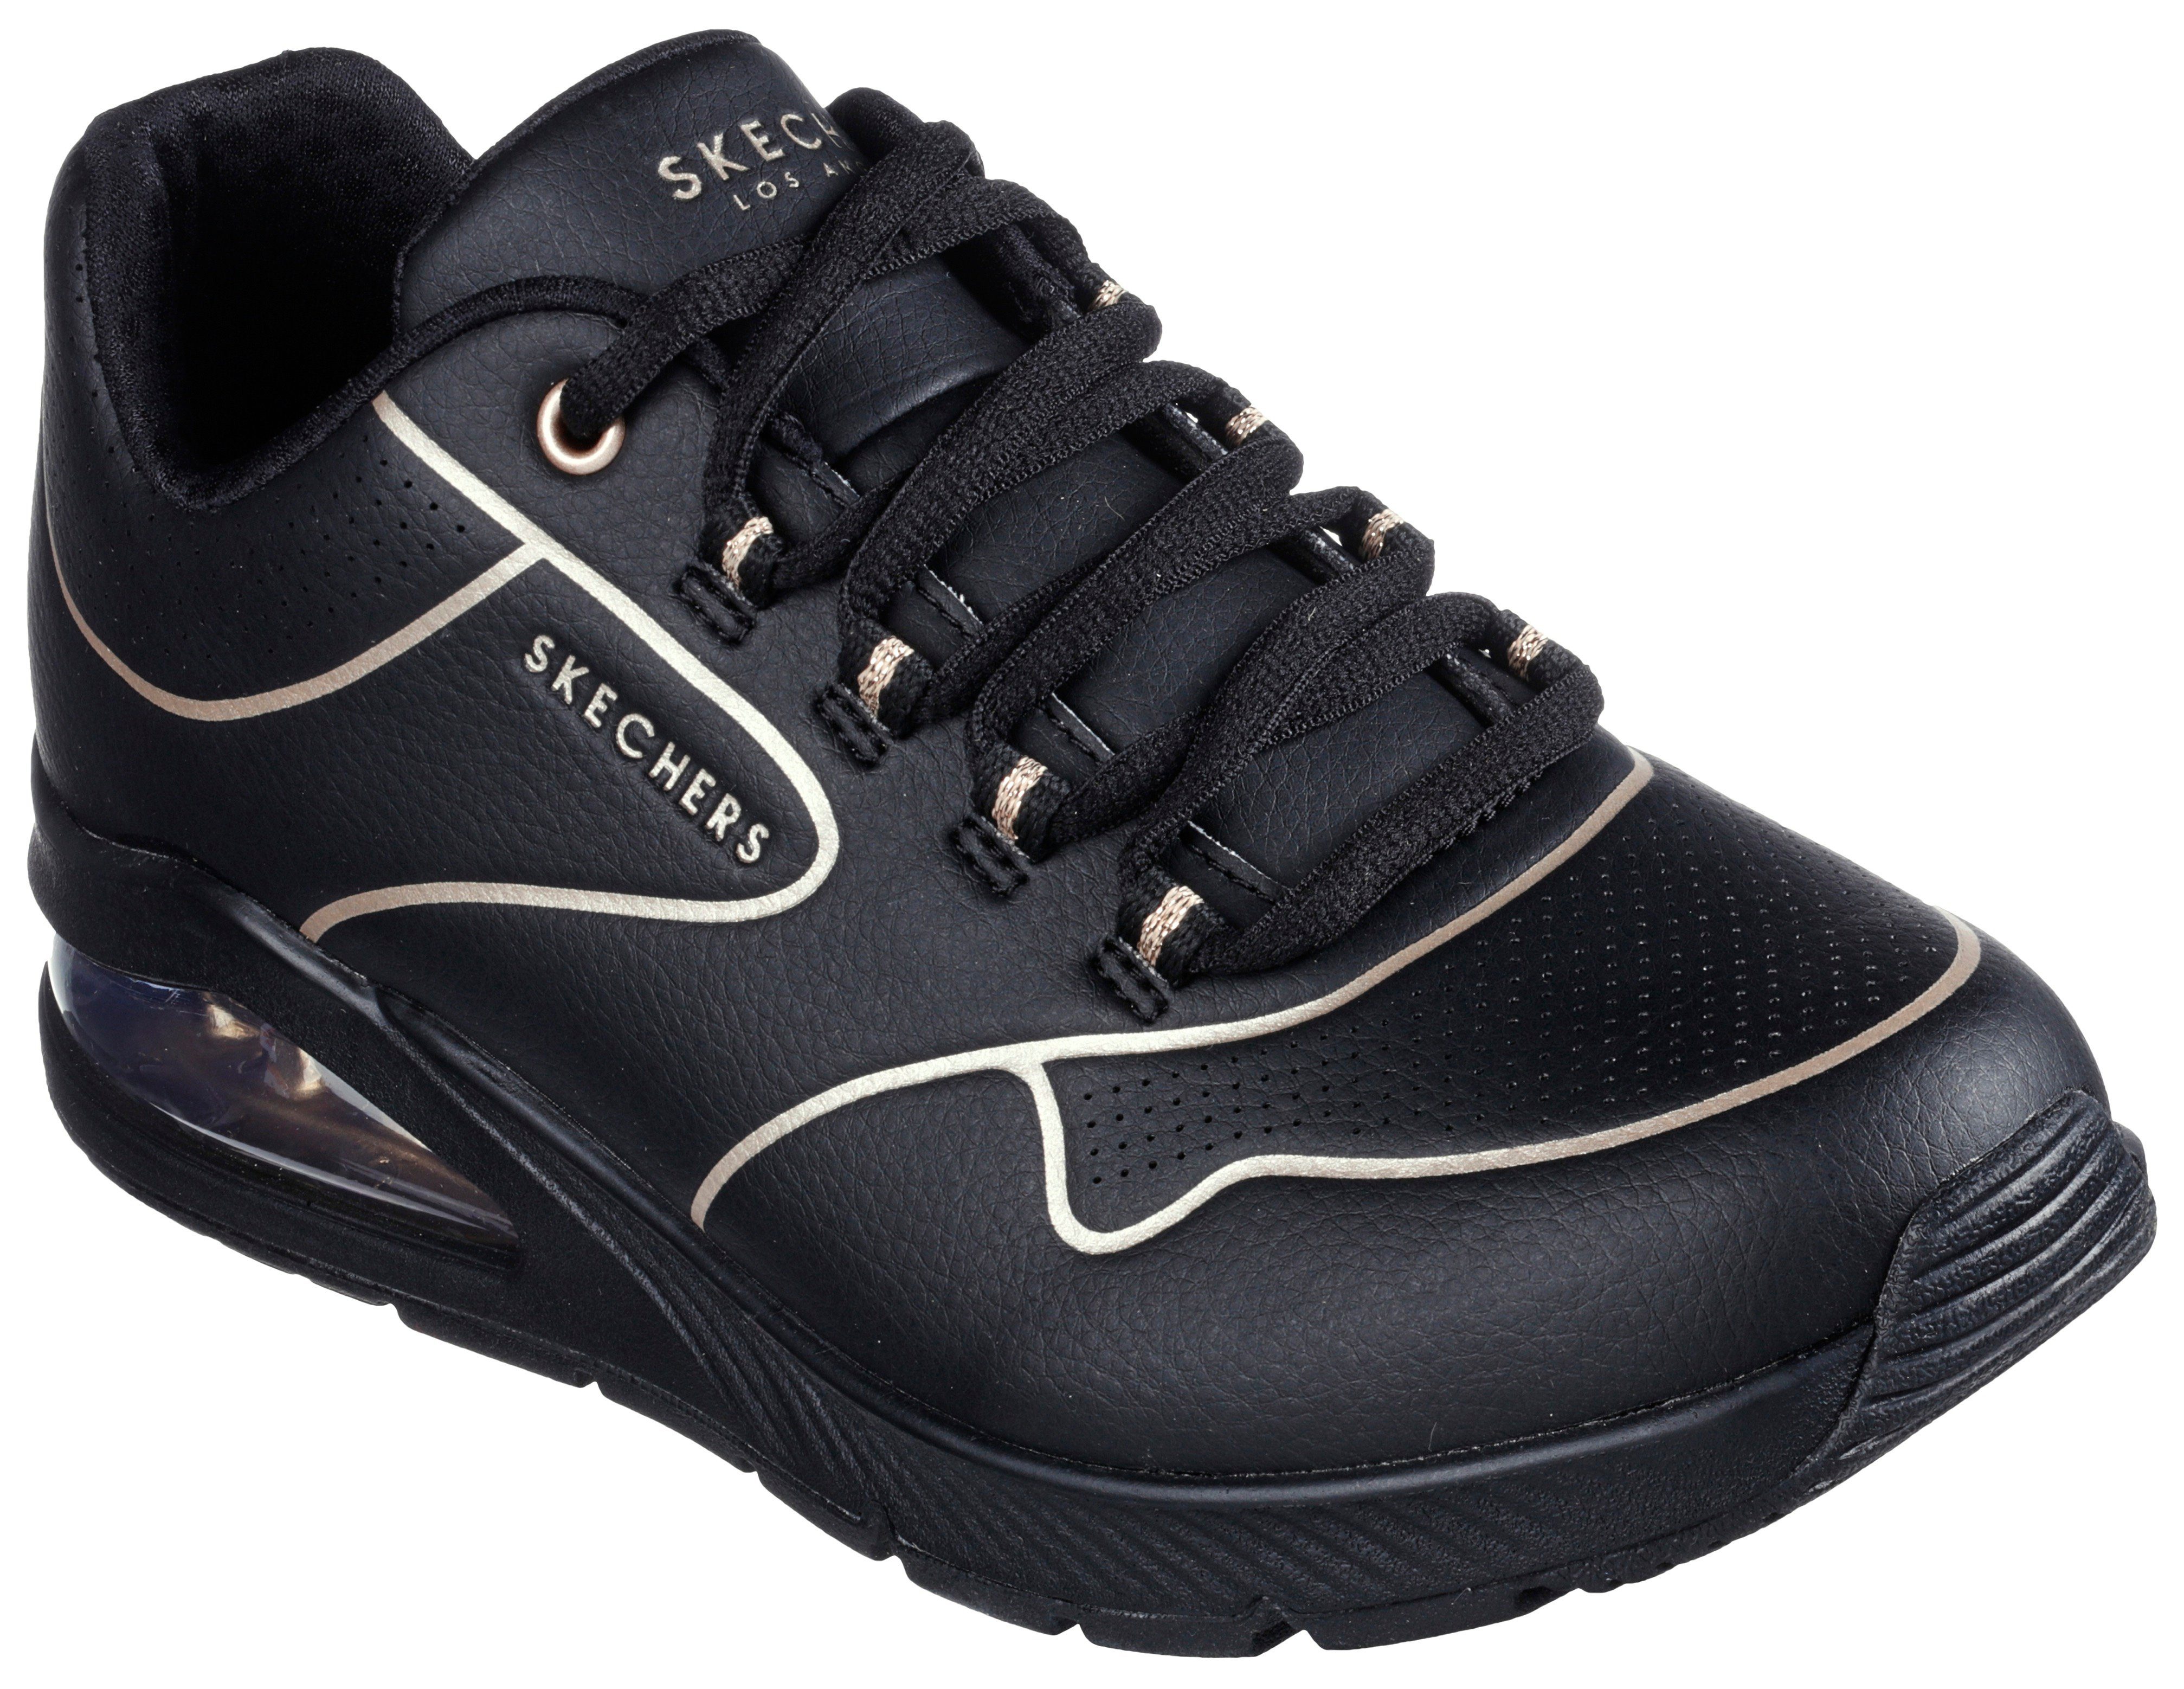 Skechers UNO 2 - GOLDEN TRIM Sneaker mit Metallic-Details schwarz-gold